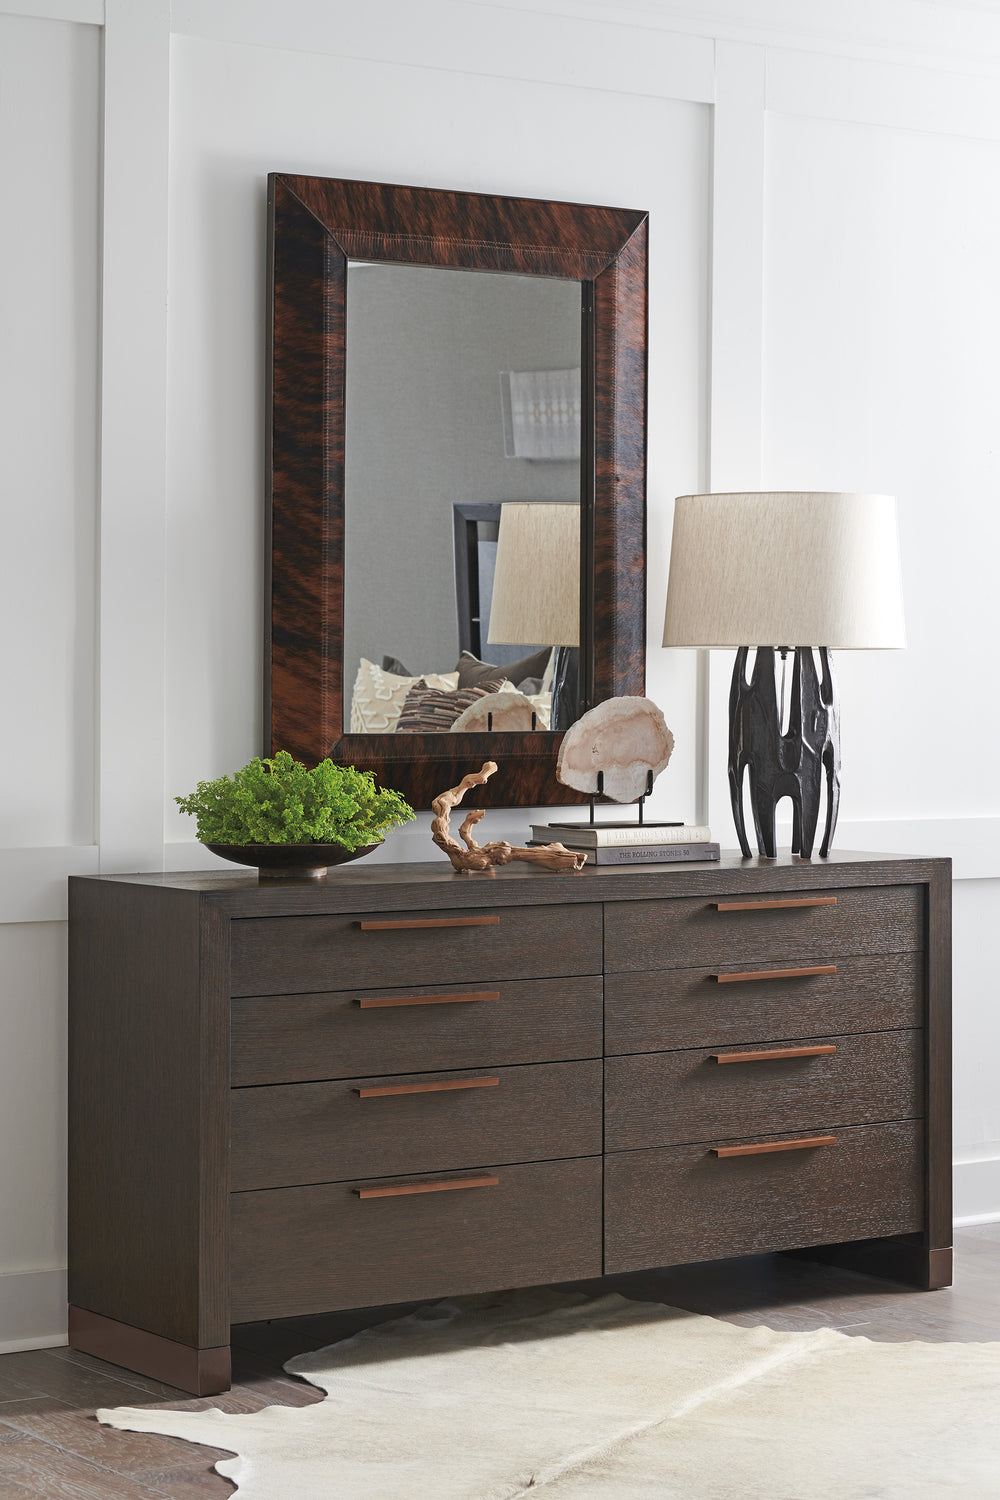 American Home Furniture | Barclay Butera  - Park City Skylark Double Dresser